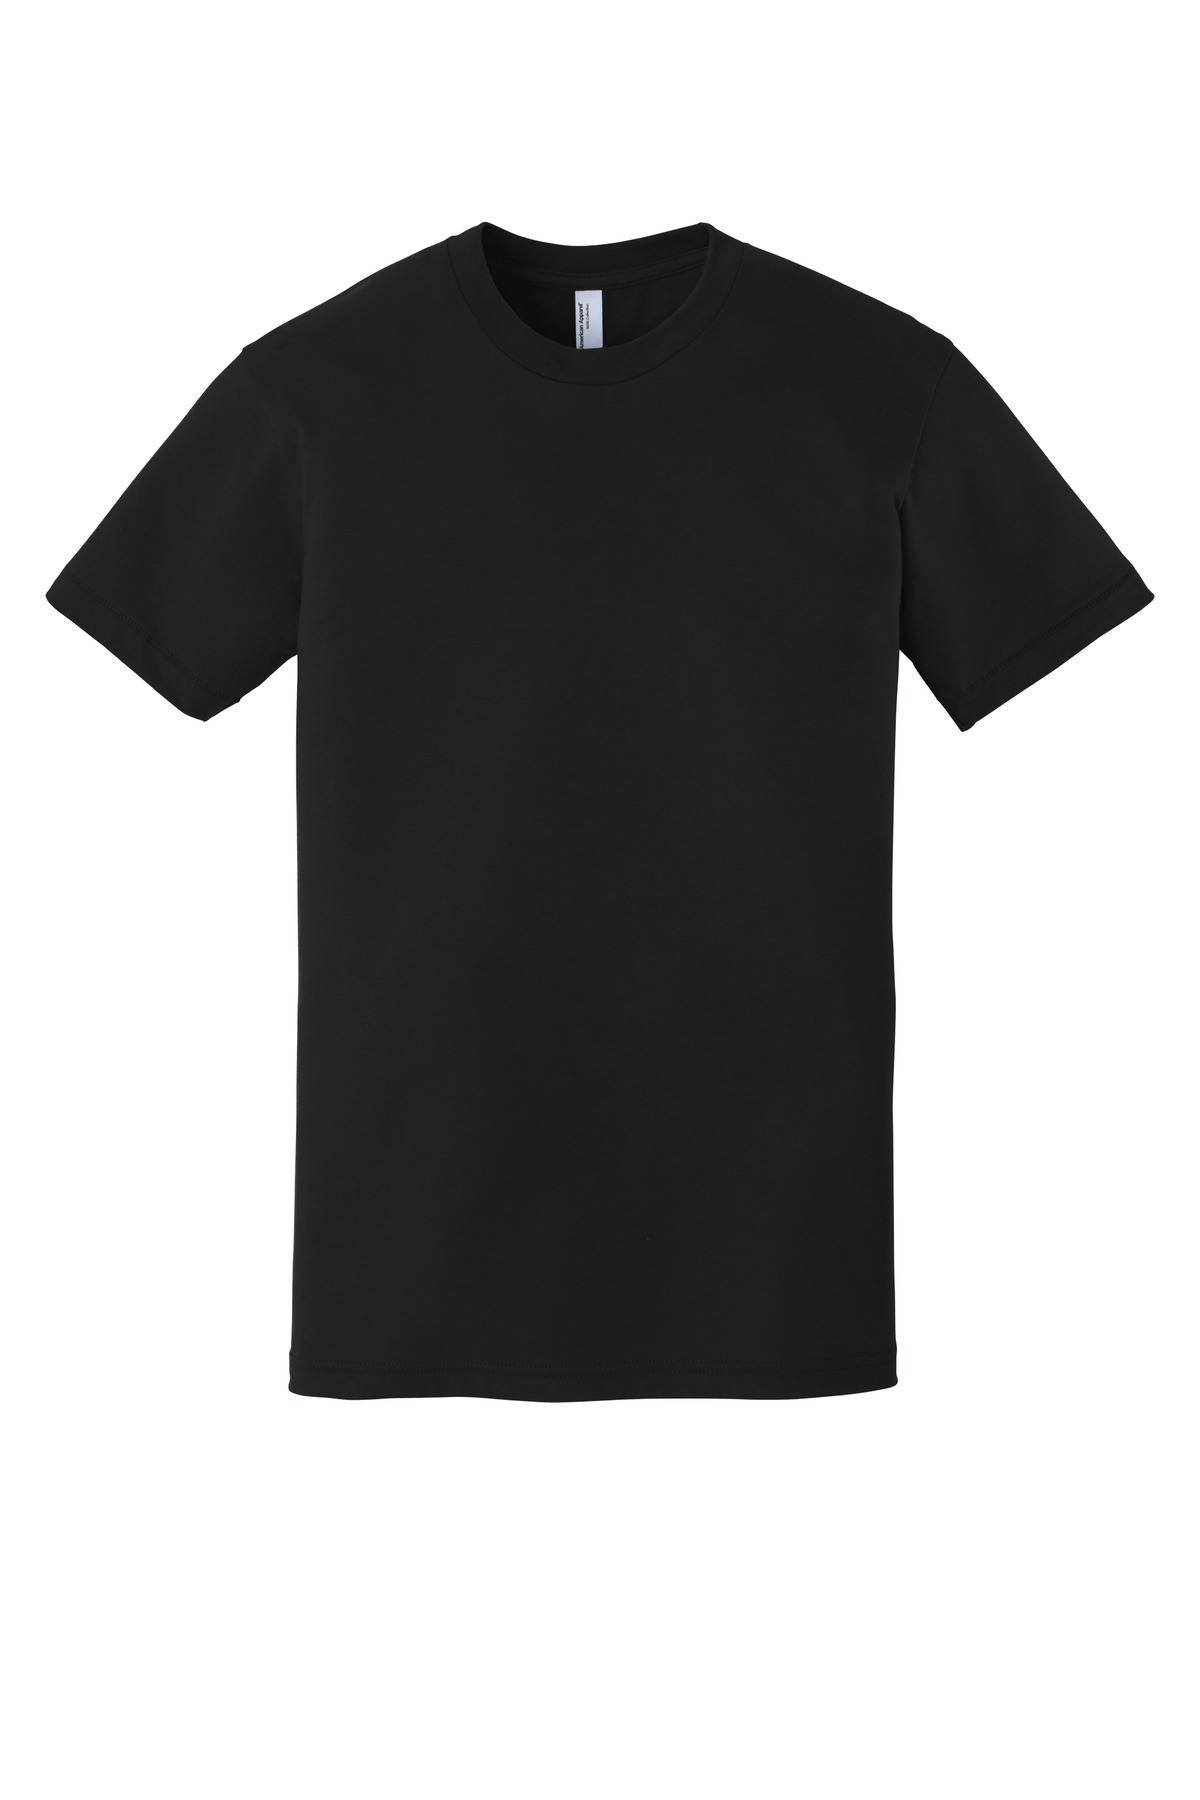 American Apparel Poly-Cotton T-Shirt. BB401W – Custom